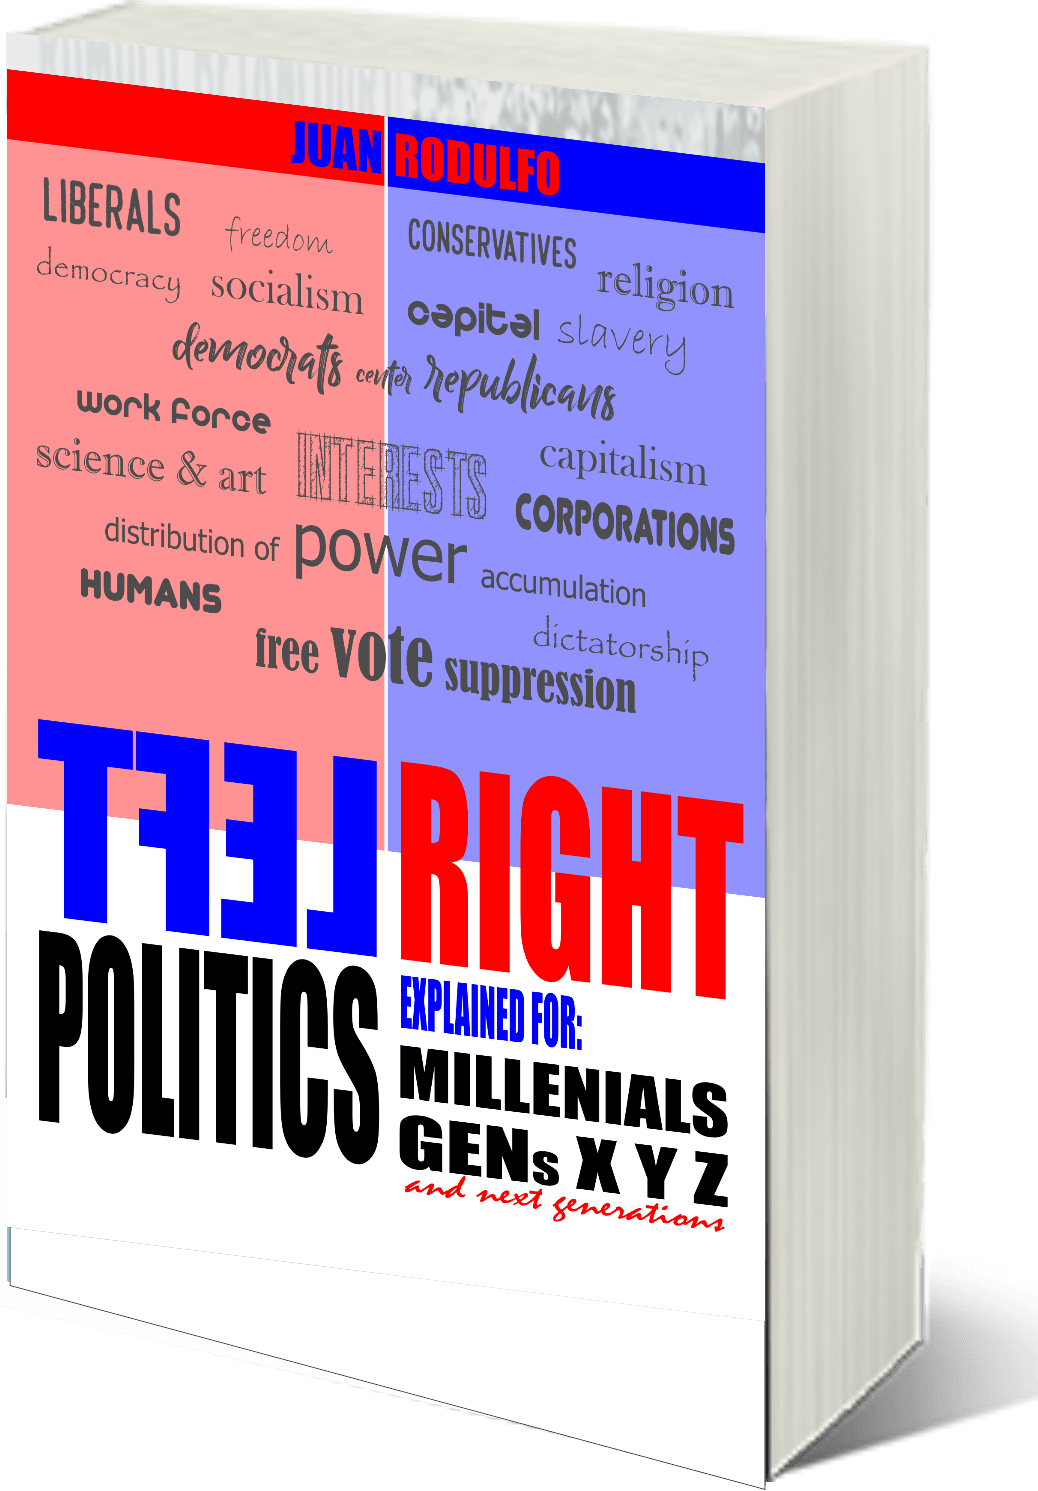 Left Right Politics explained for Millennials by Juan Rodulfo